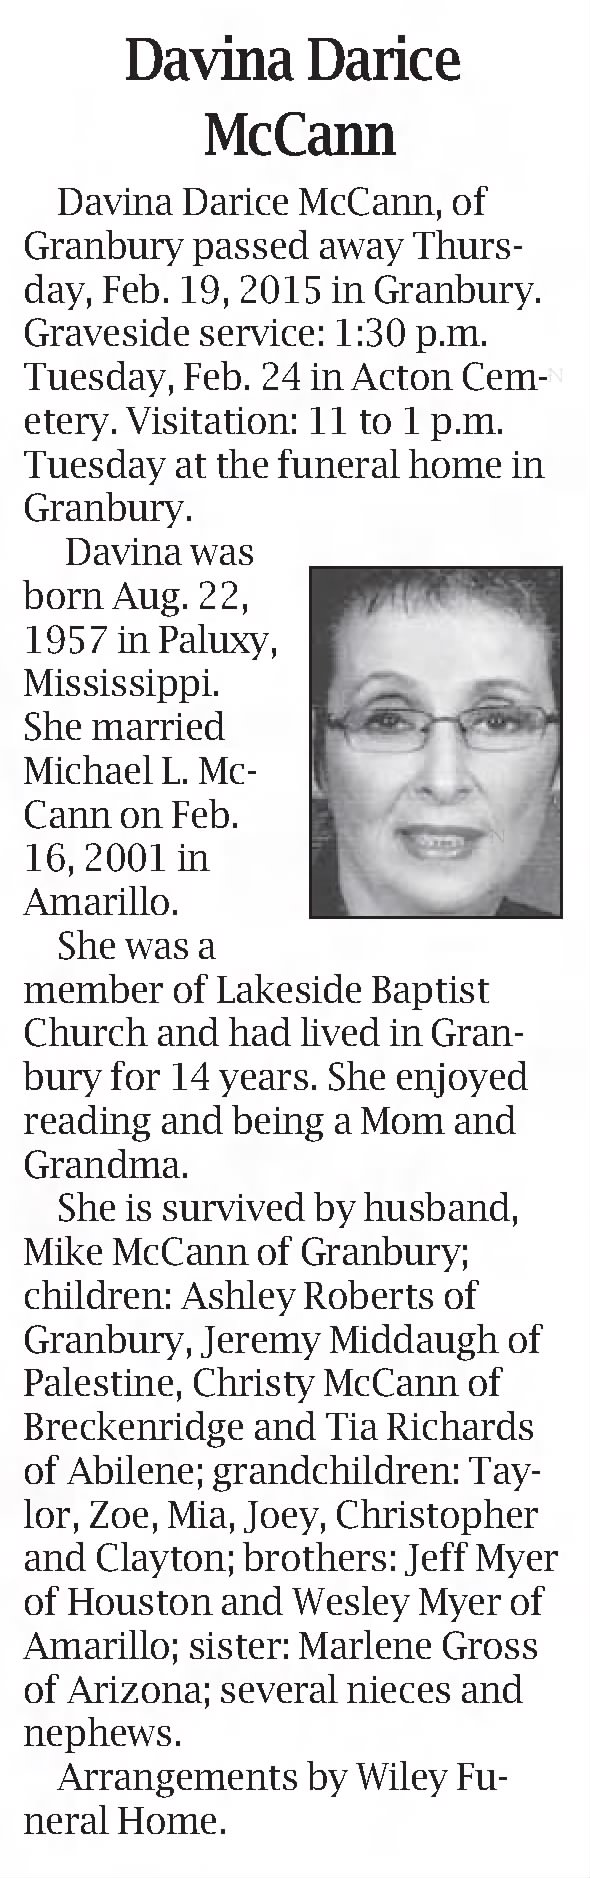 Obituary for Davina Darice McCann